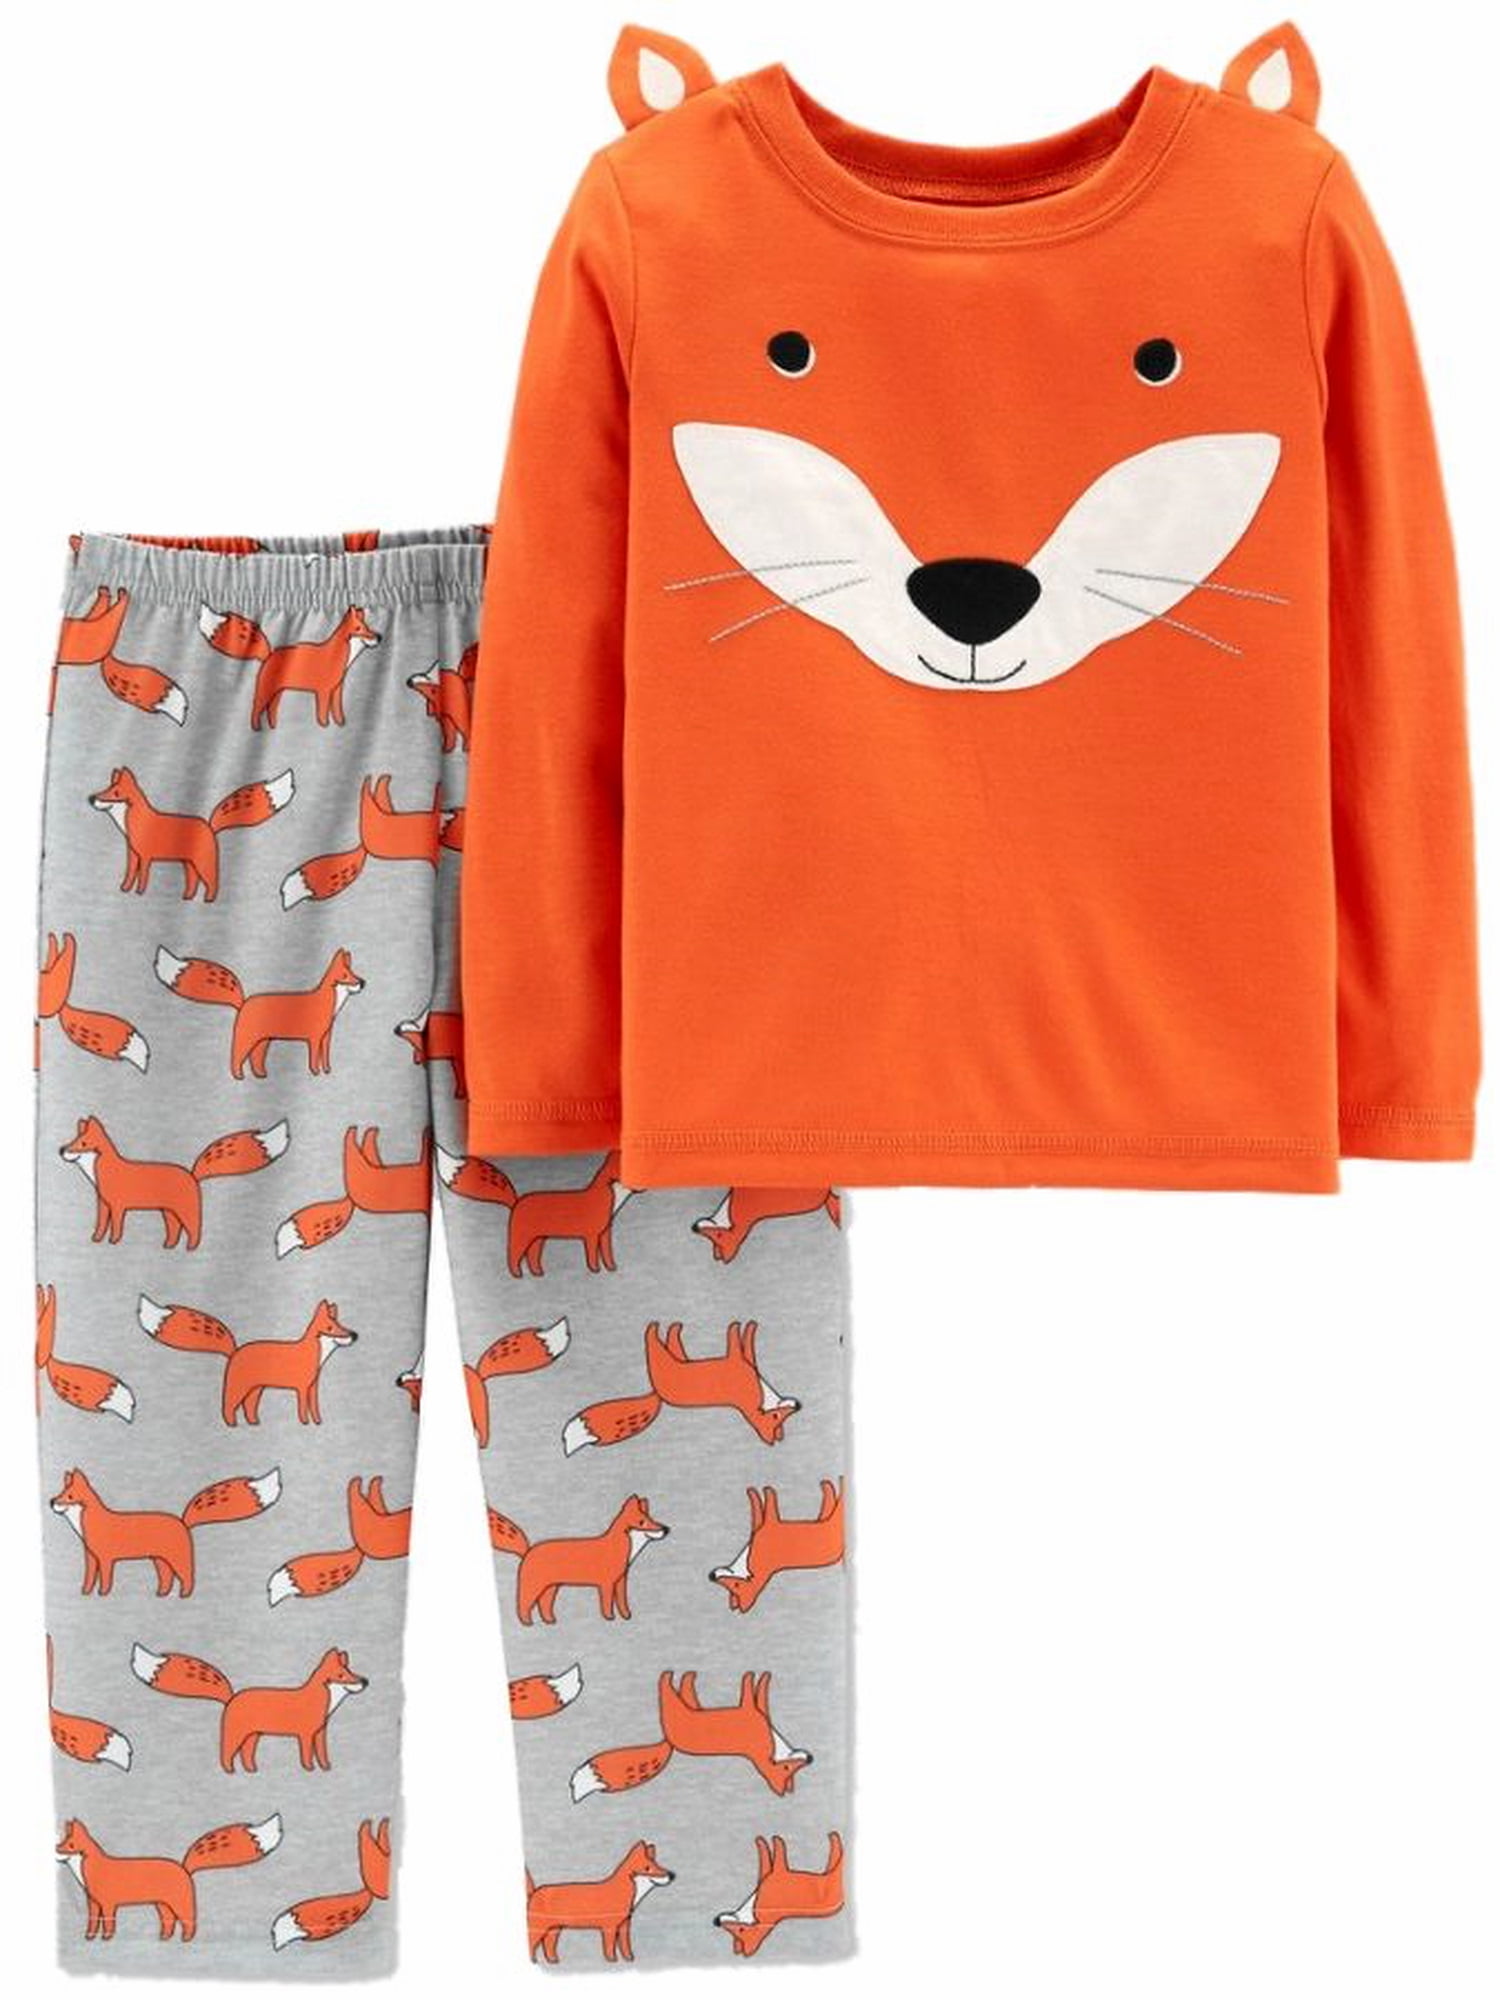 Carter's Carters Infant & Toddler Boys Orange Fox Print Winter 2 Piece Pajama PJ Set 18M